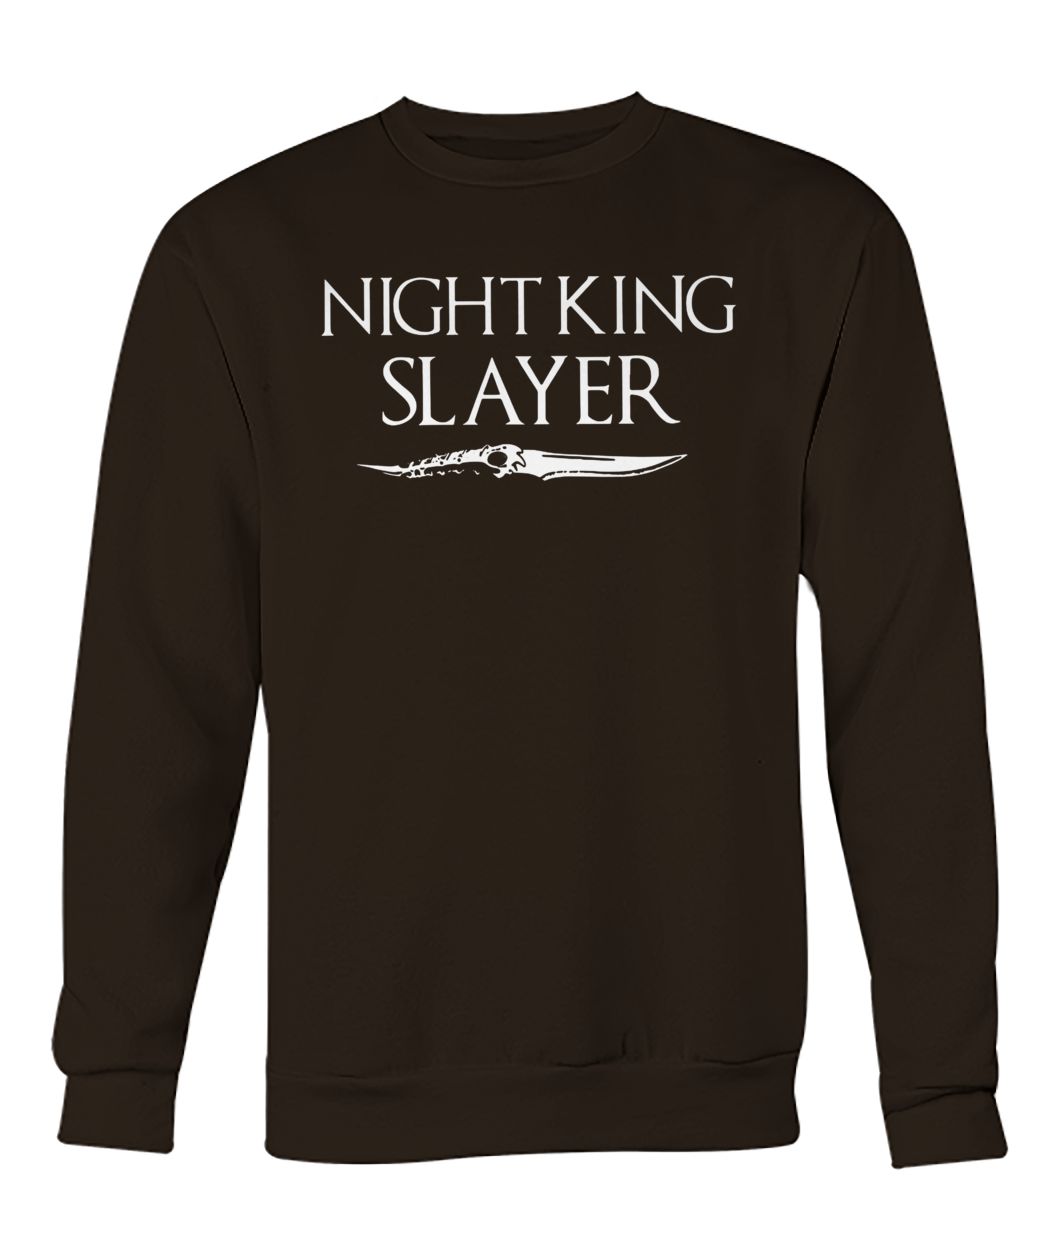 Game of thrones night king slayer crew neck sweatshirt